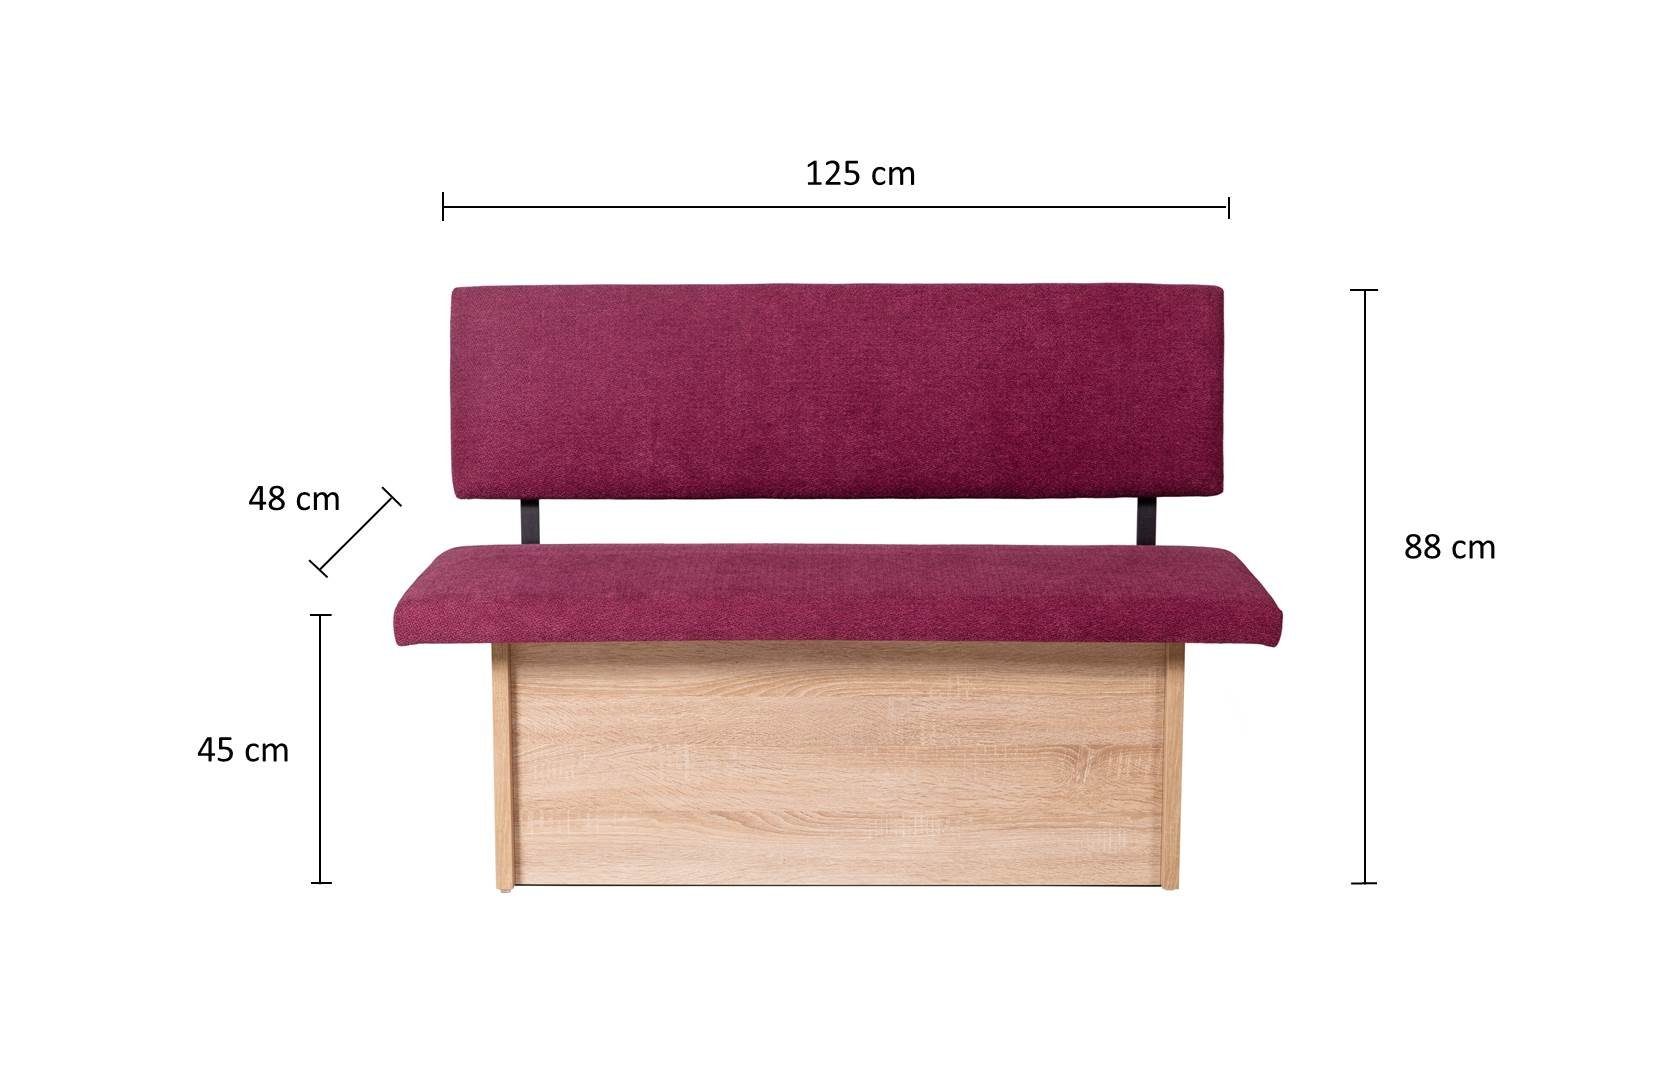 L125cm, gepolstert, 3-tlg. 4-Fuß-Tisch Sitzbank home kundler Truhe, mit Set Essgruppe Bank